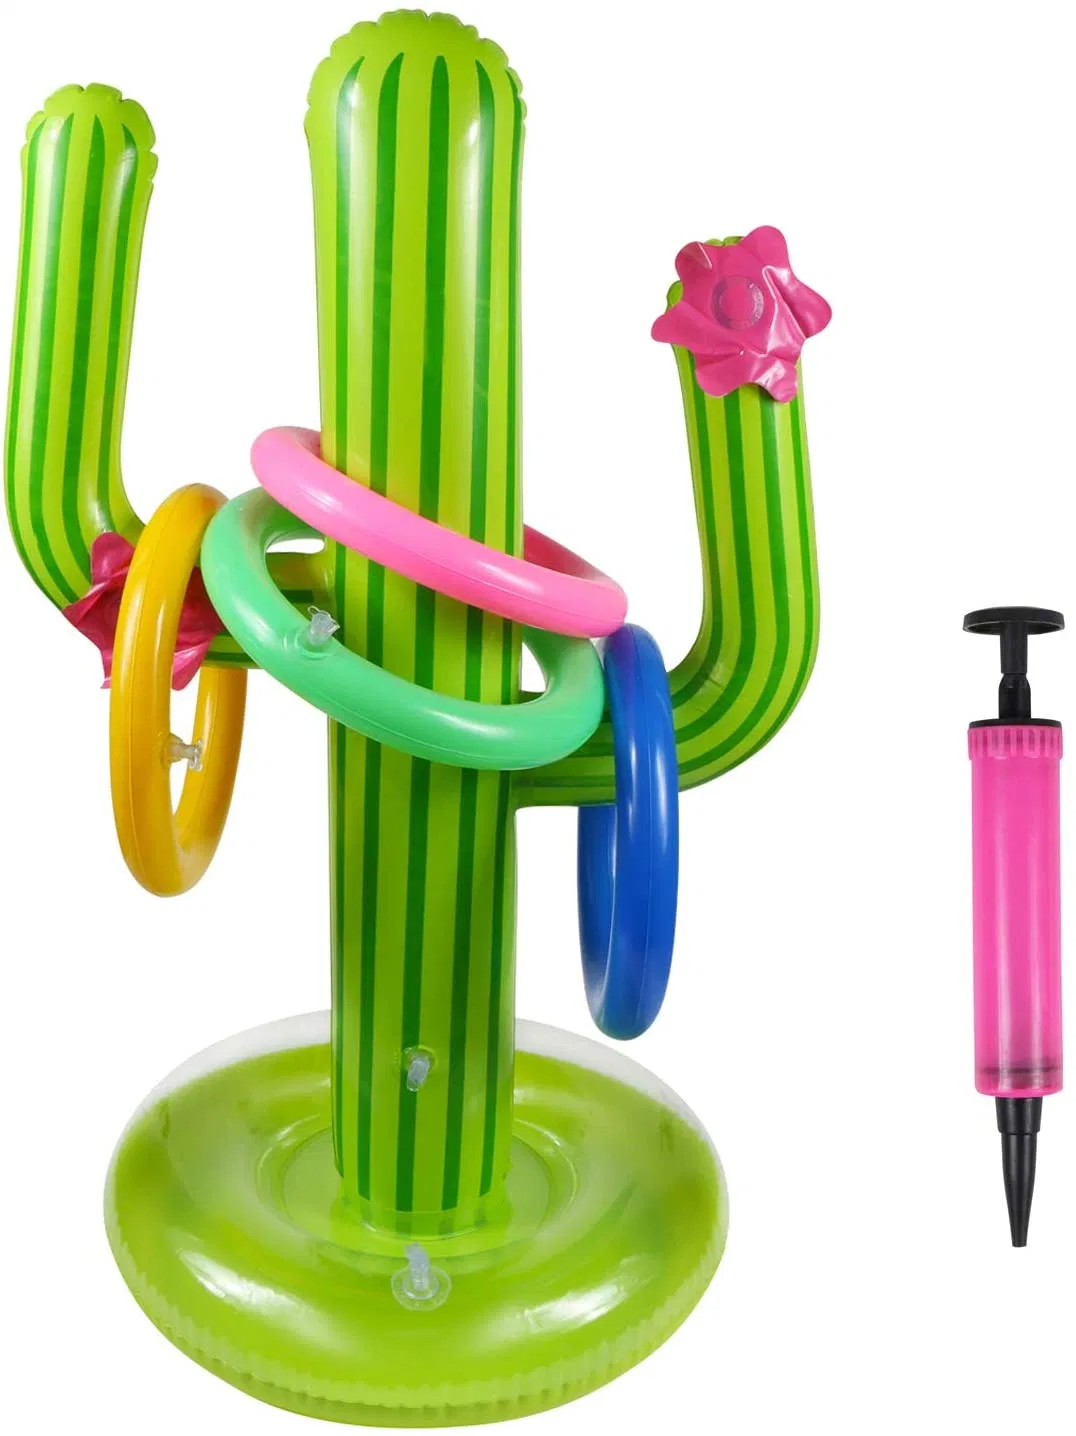 Piscina hinchable de PVC Cactus arrojando Juego juguete piscina flotante suministros de Beach Party parte viajes